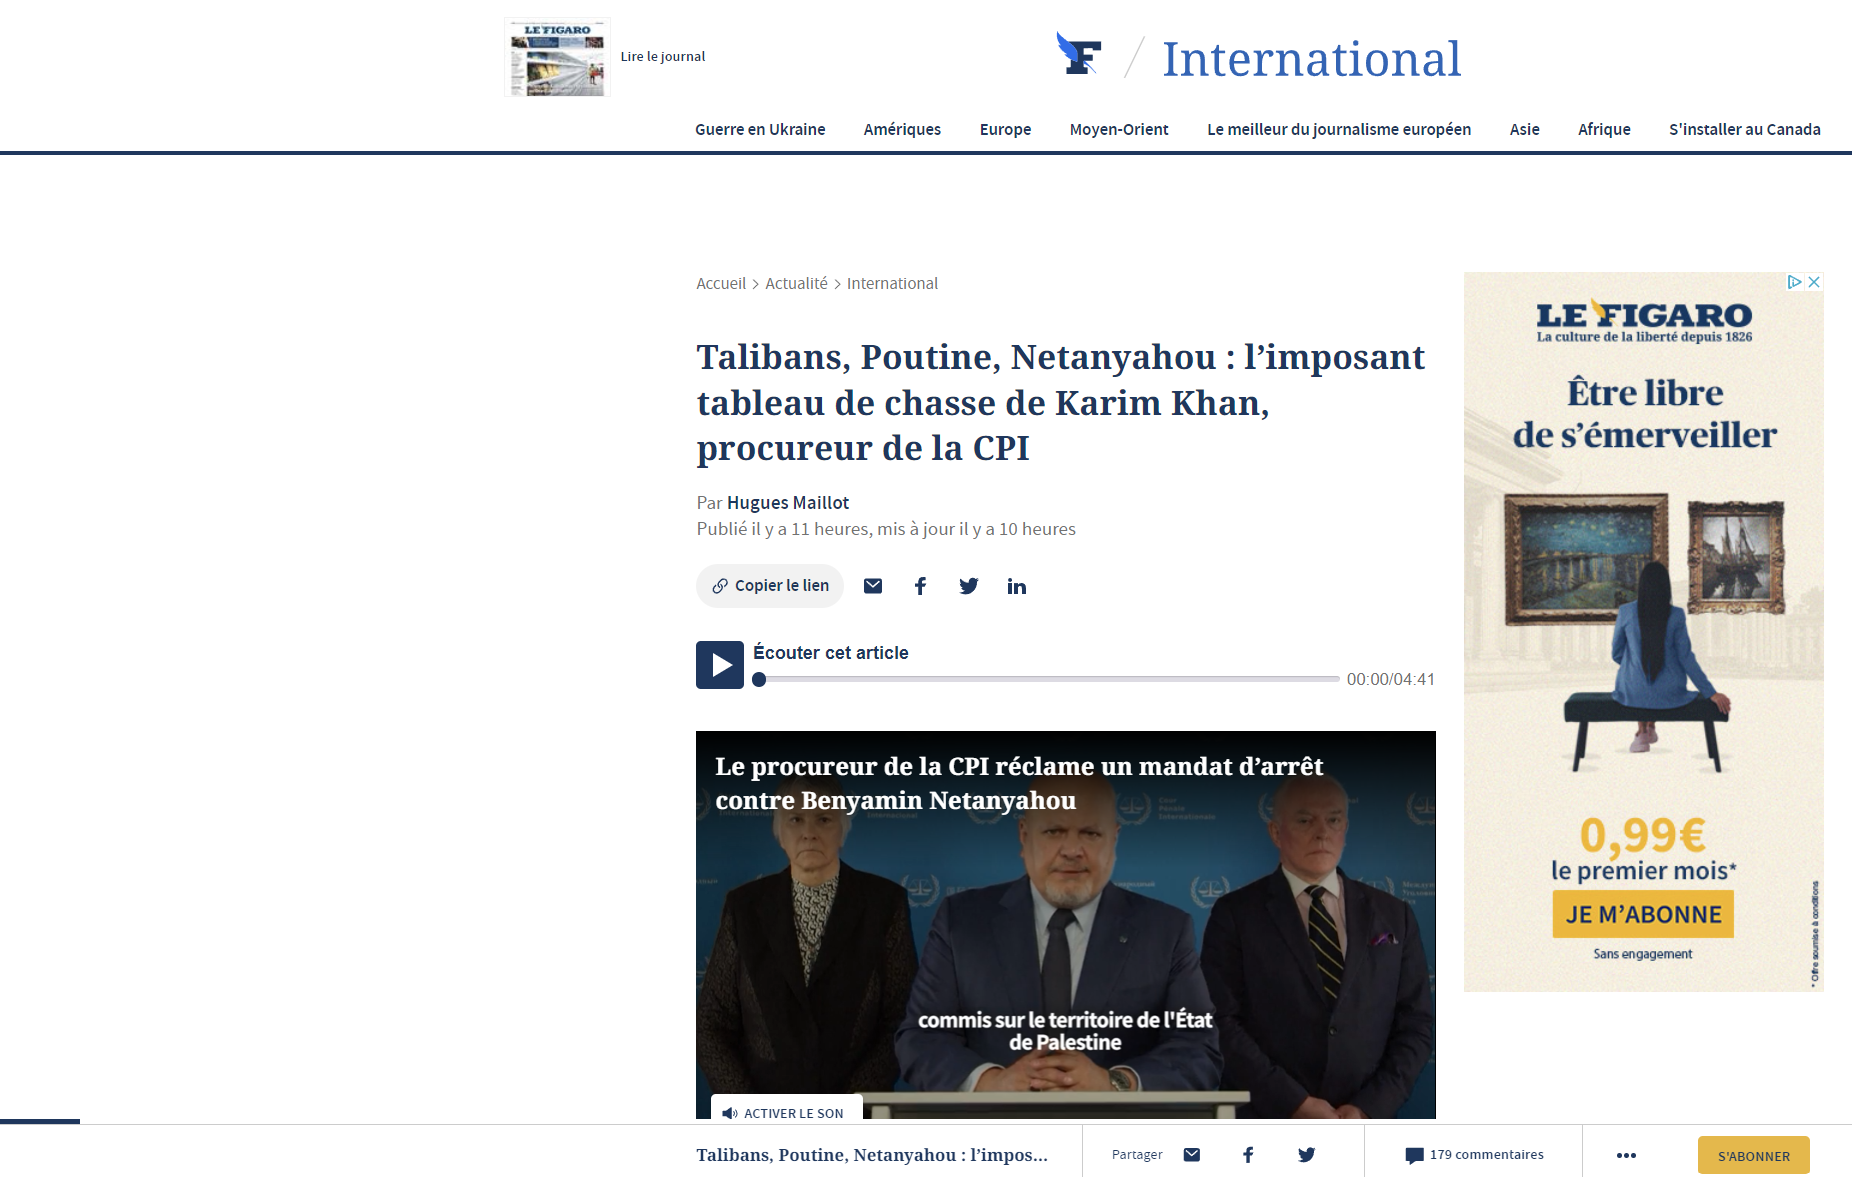 Le Figaro: Ταλιμπάν, Πούτιν, Νετανιάχου! Το επιβλητικό κυνήγι του Καρίμ Χαν, εισαγγελέα του Διεθνούς Ποινικού Δικαστηρίου